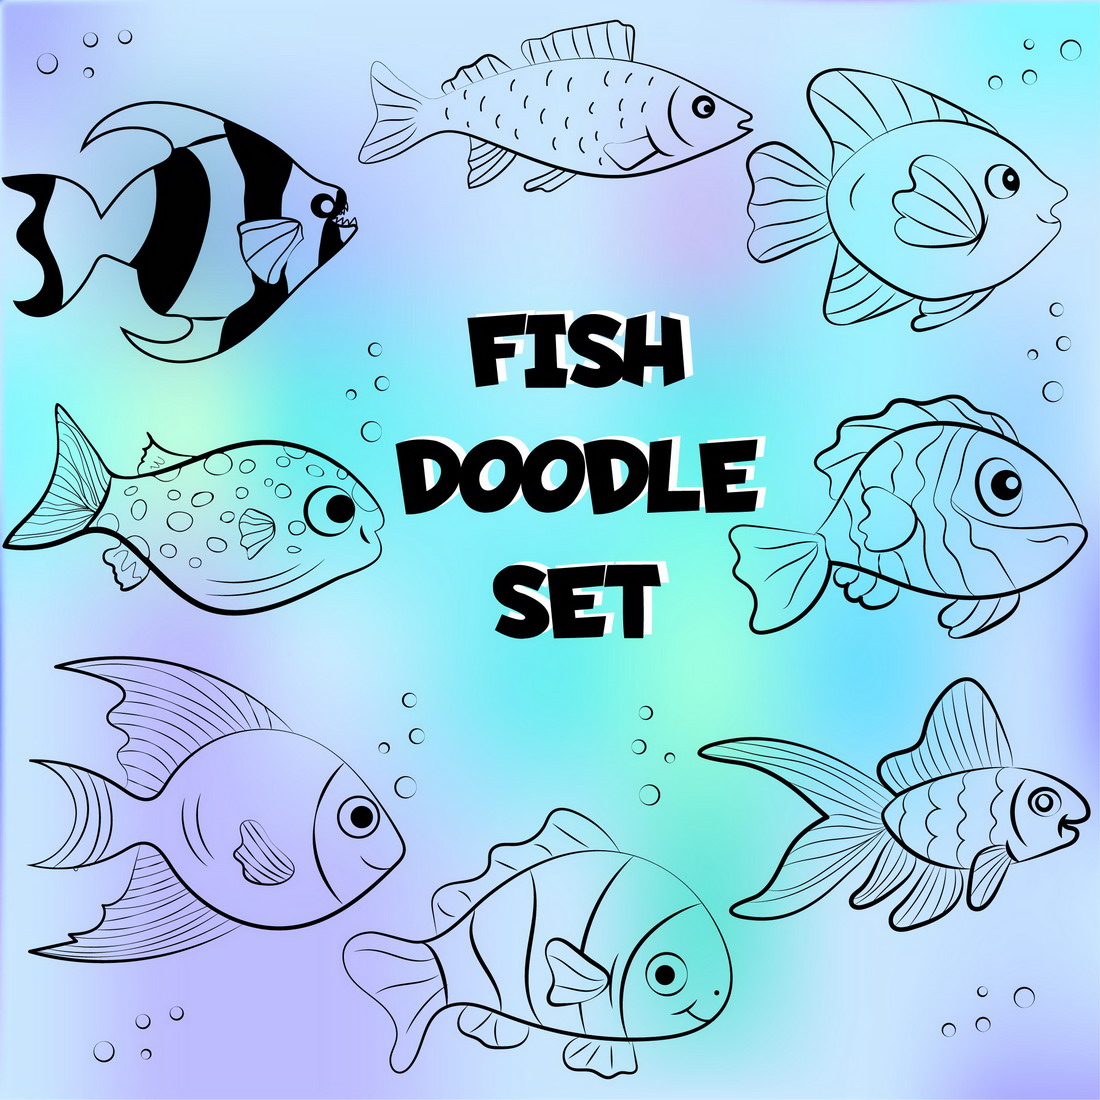 Fish Doodle Set Illustrations cover image.